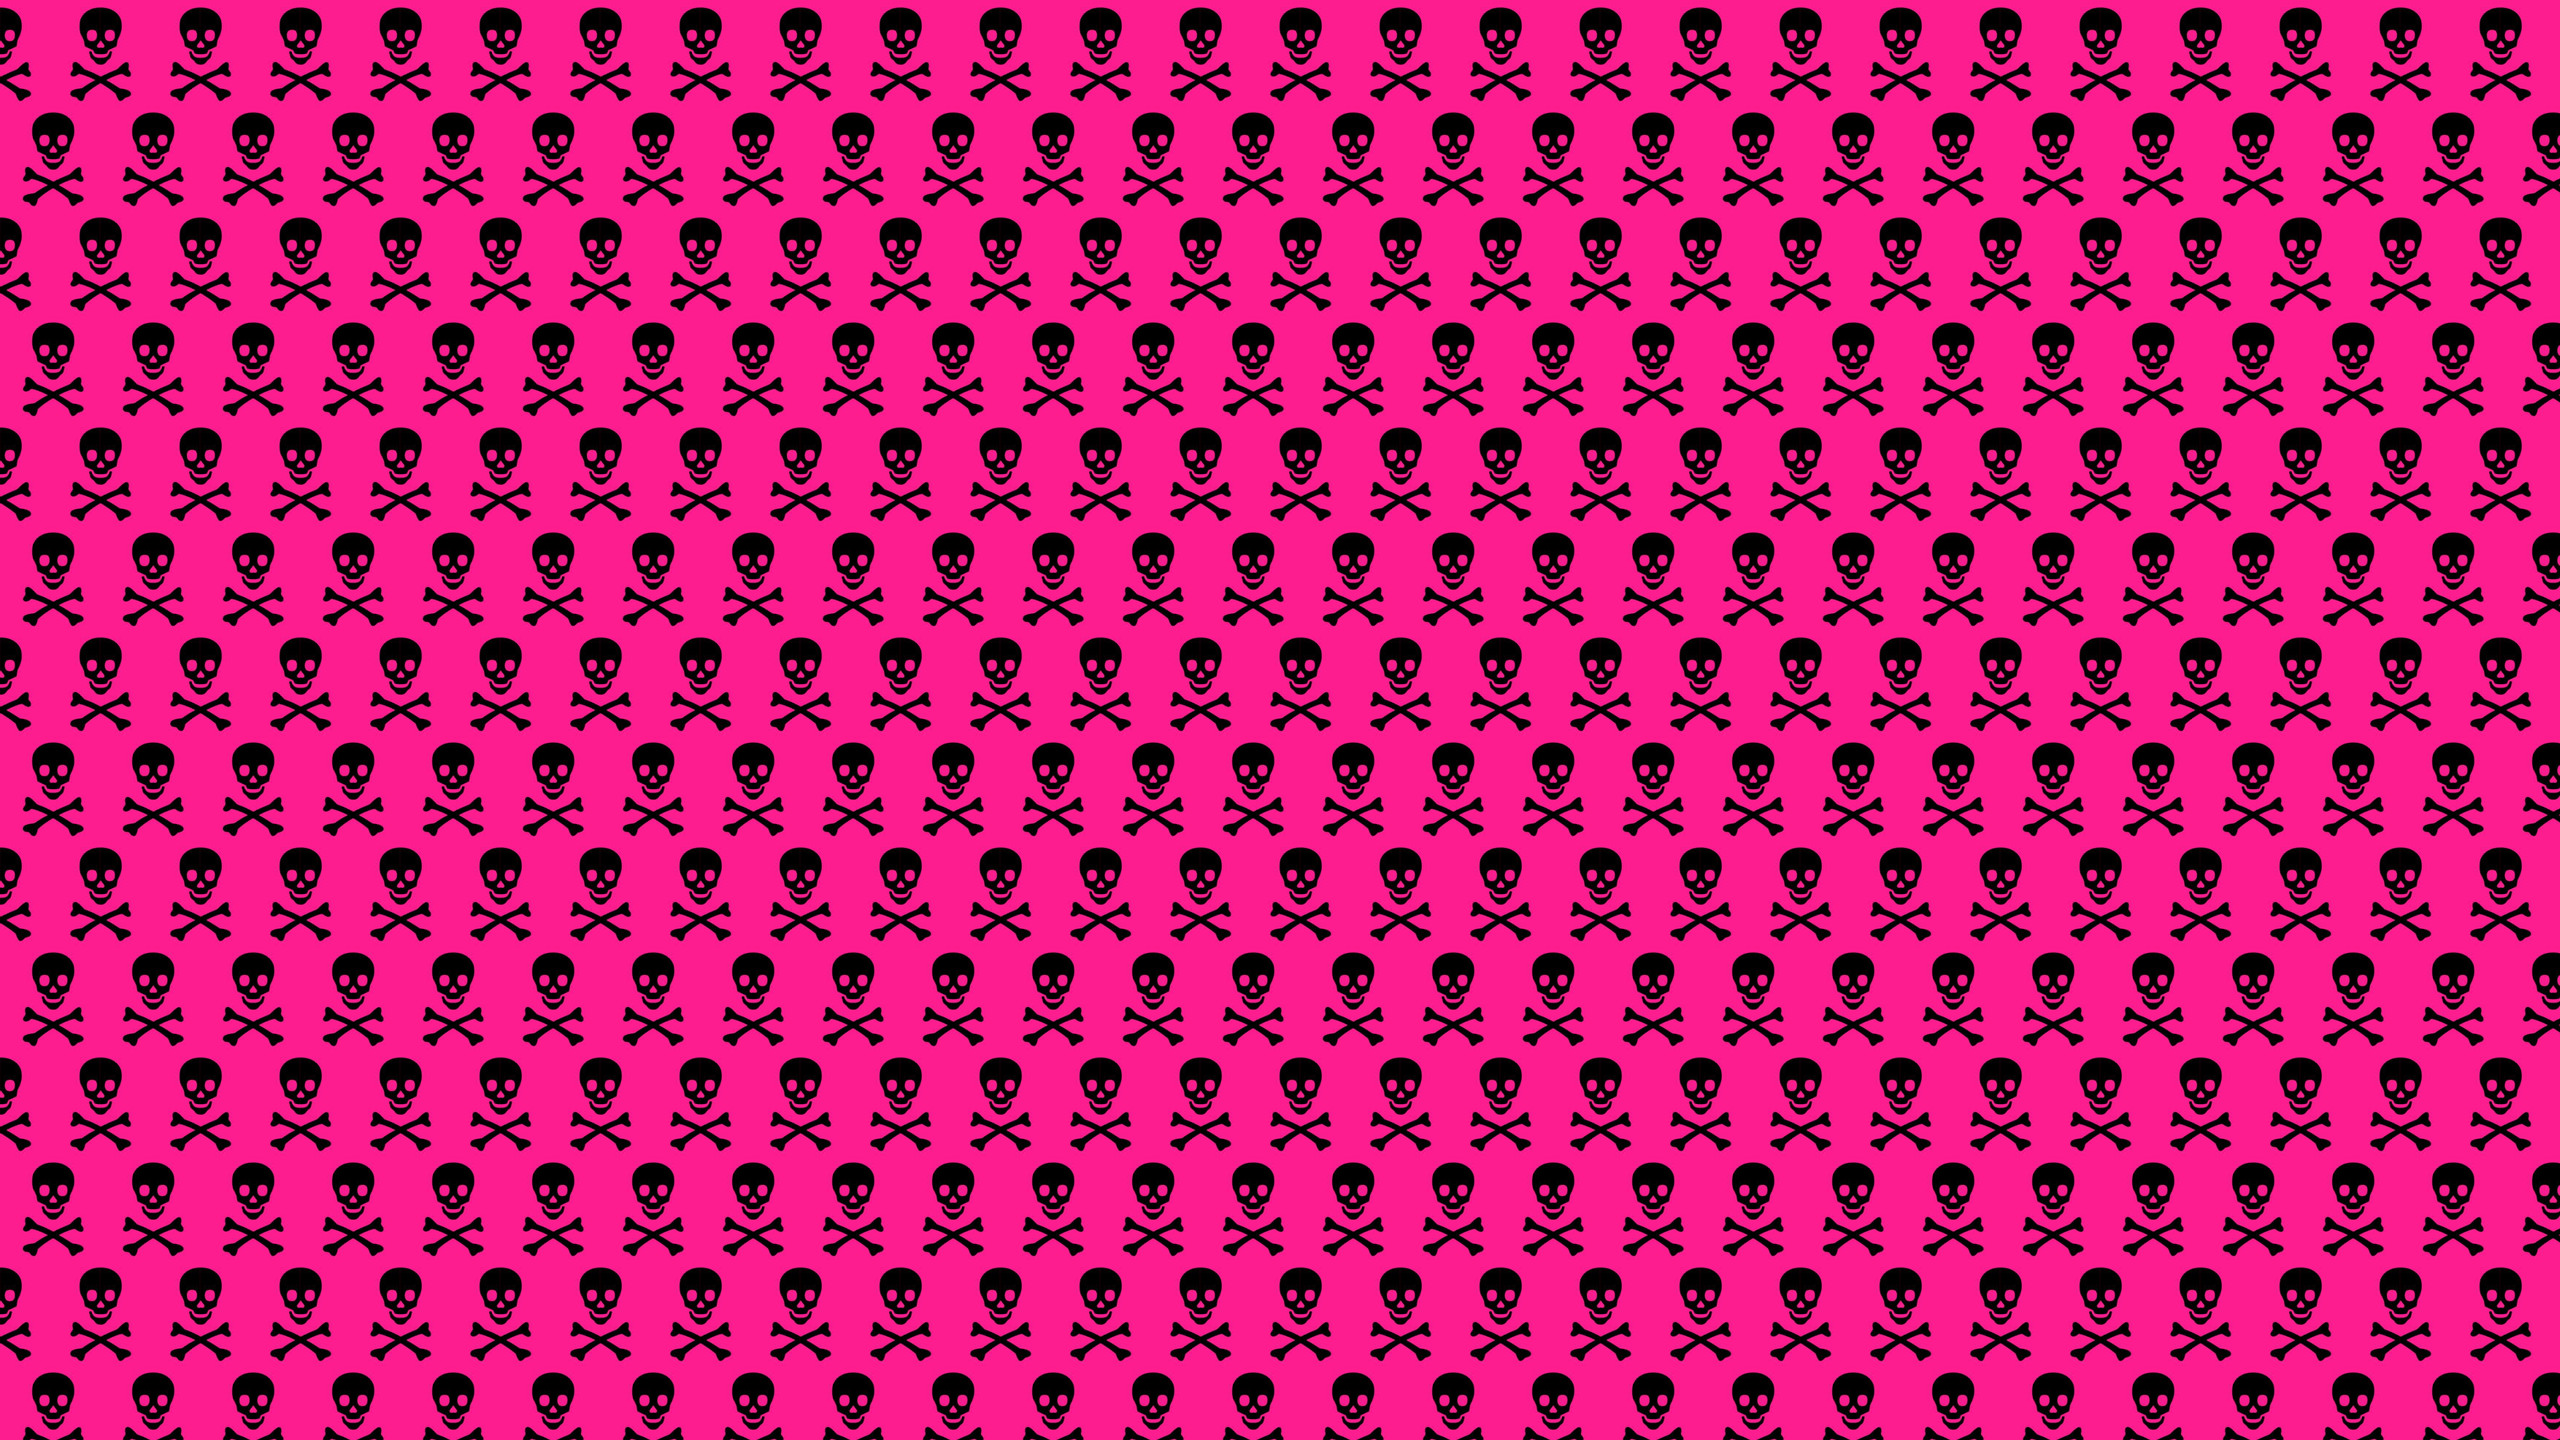 2560x1440 Installing this Hot Pink Skull Crossbones Desktop Wallpaper is easy .